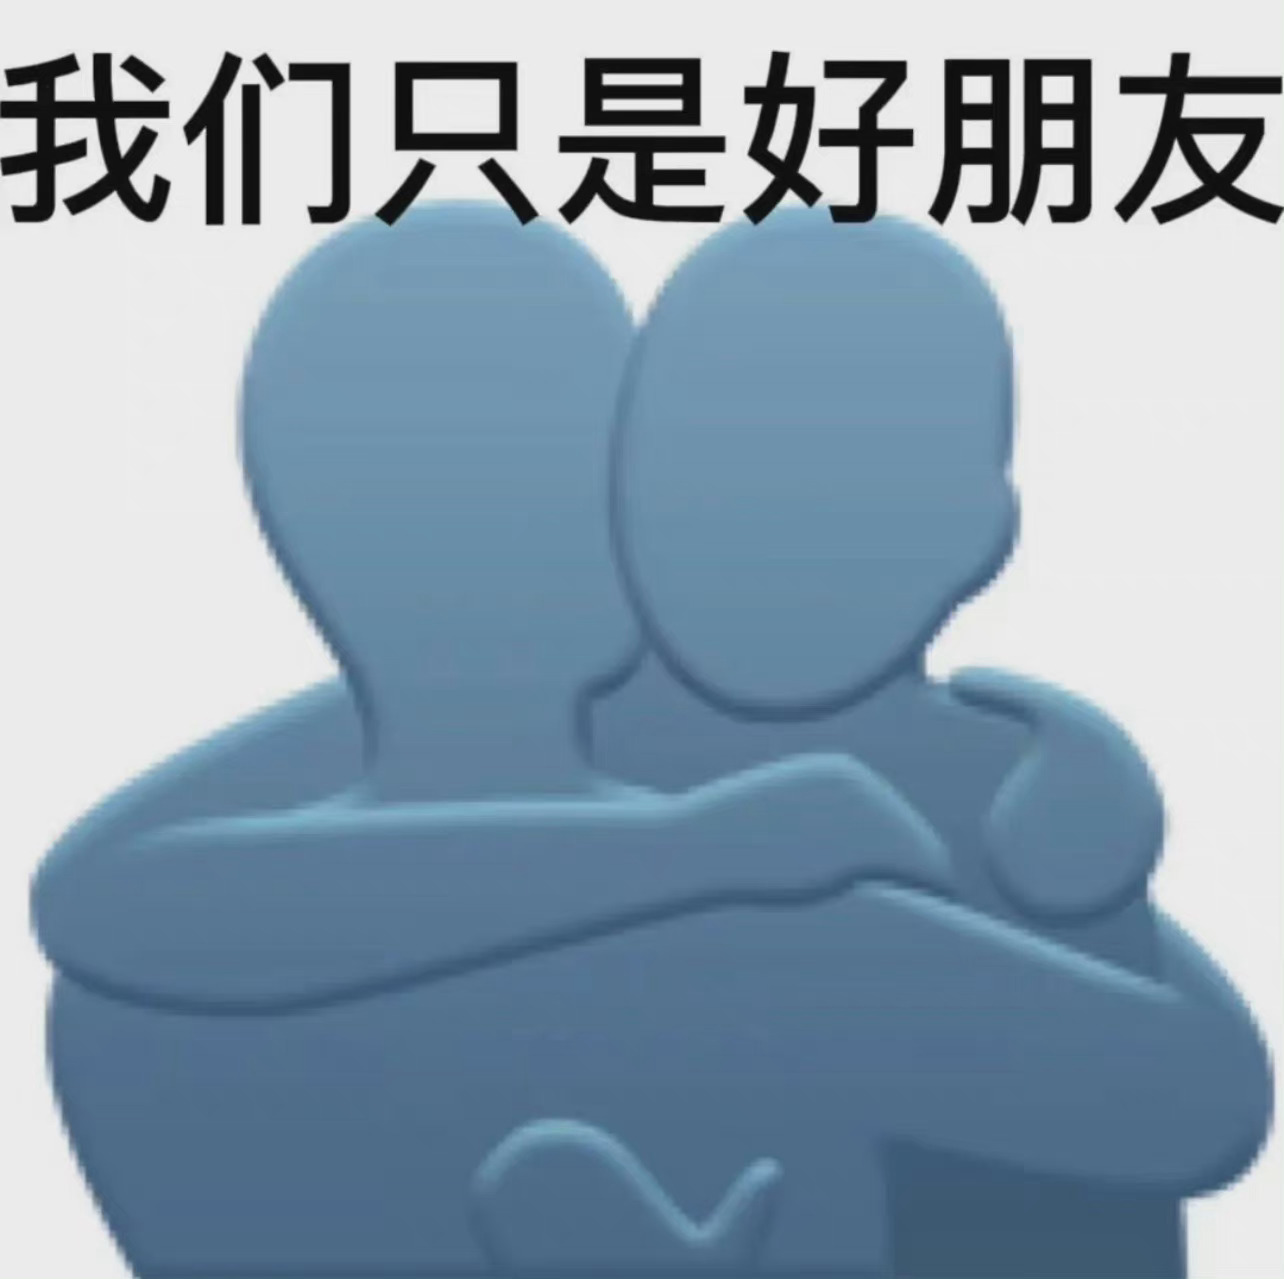 emoji表情设计图__其他_广告设计_设计图库_昵图网nipic.com